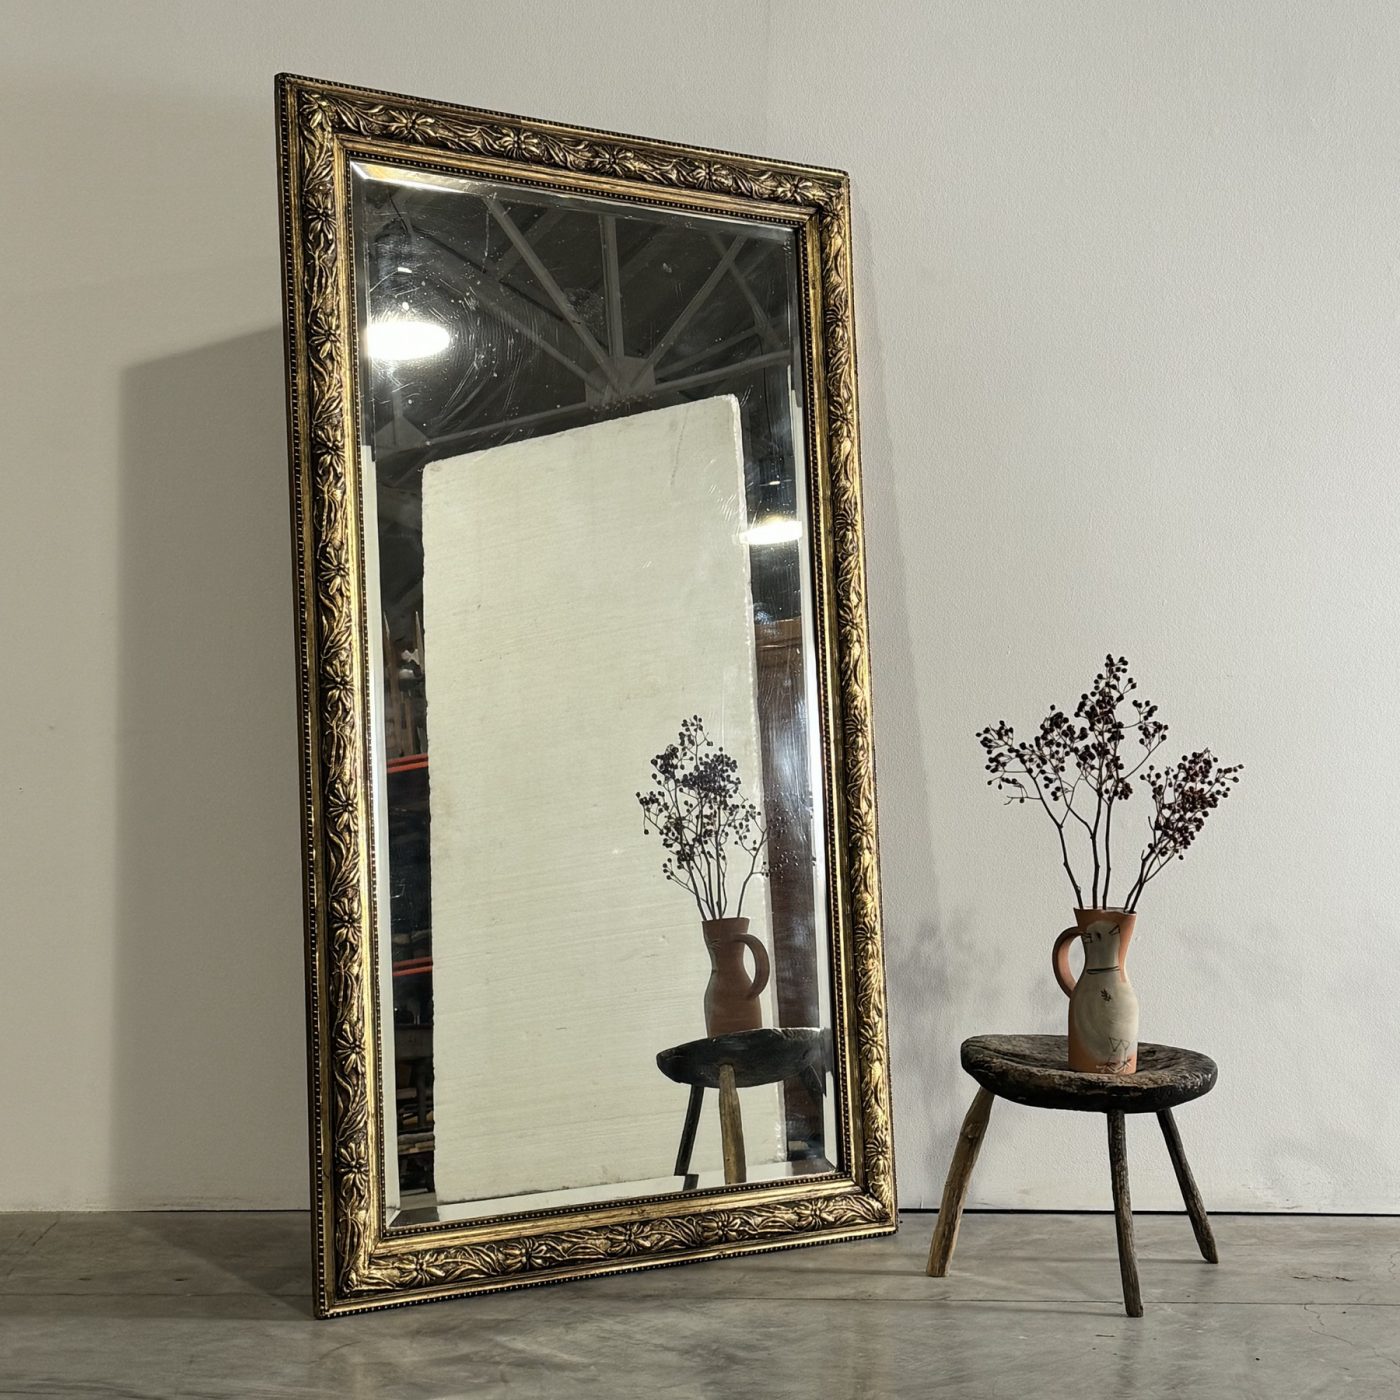 objet-vagabond-mirror0001